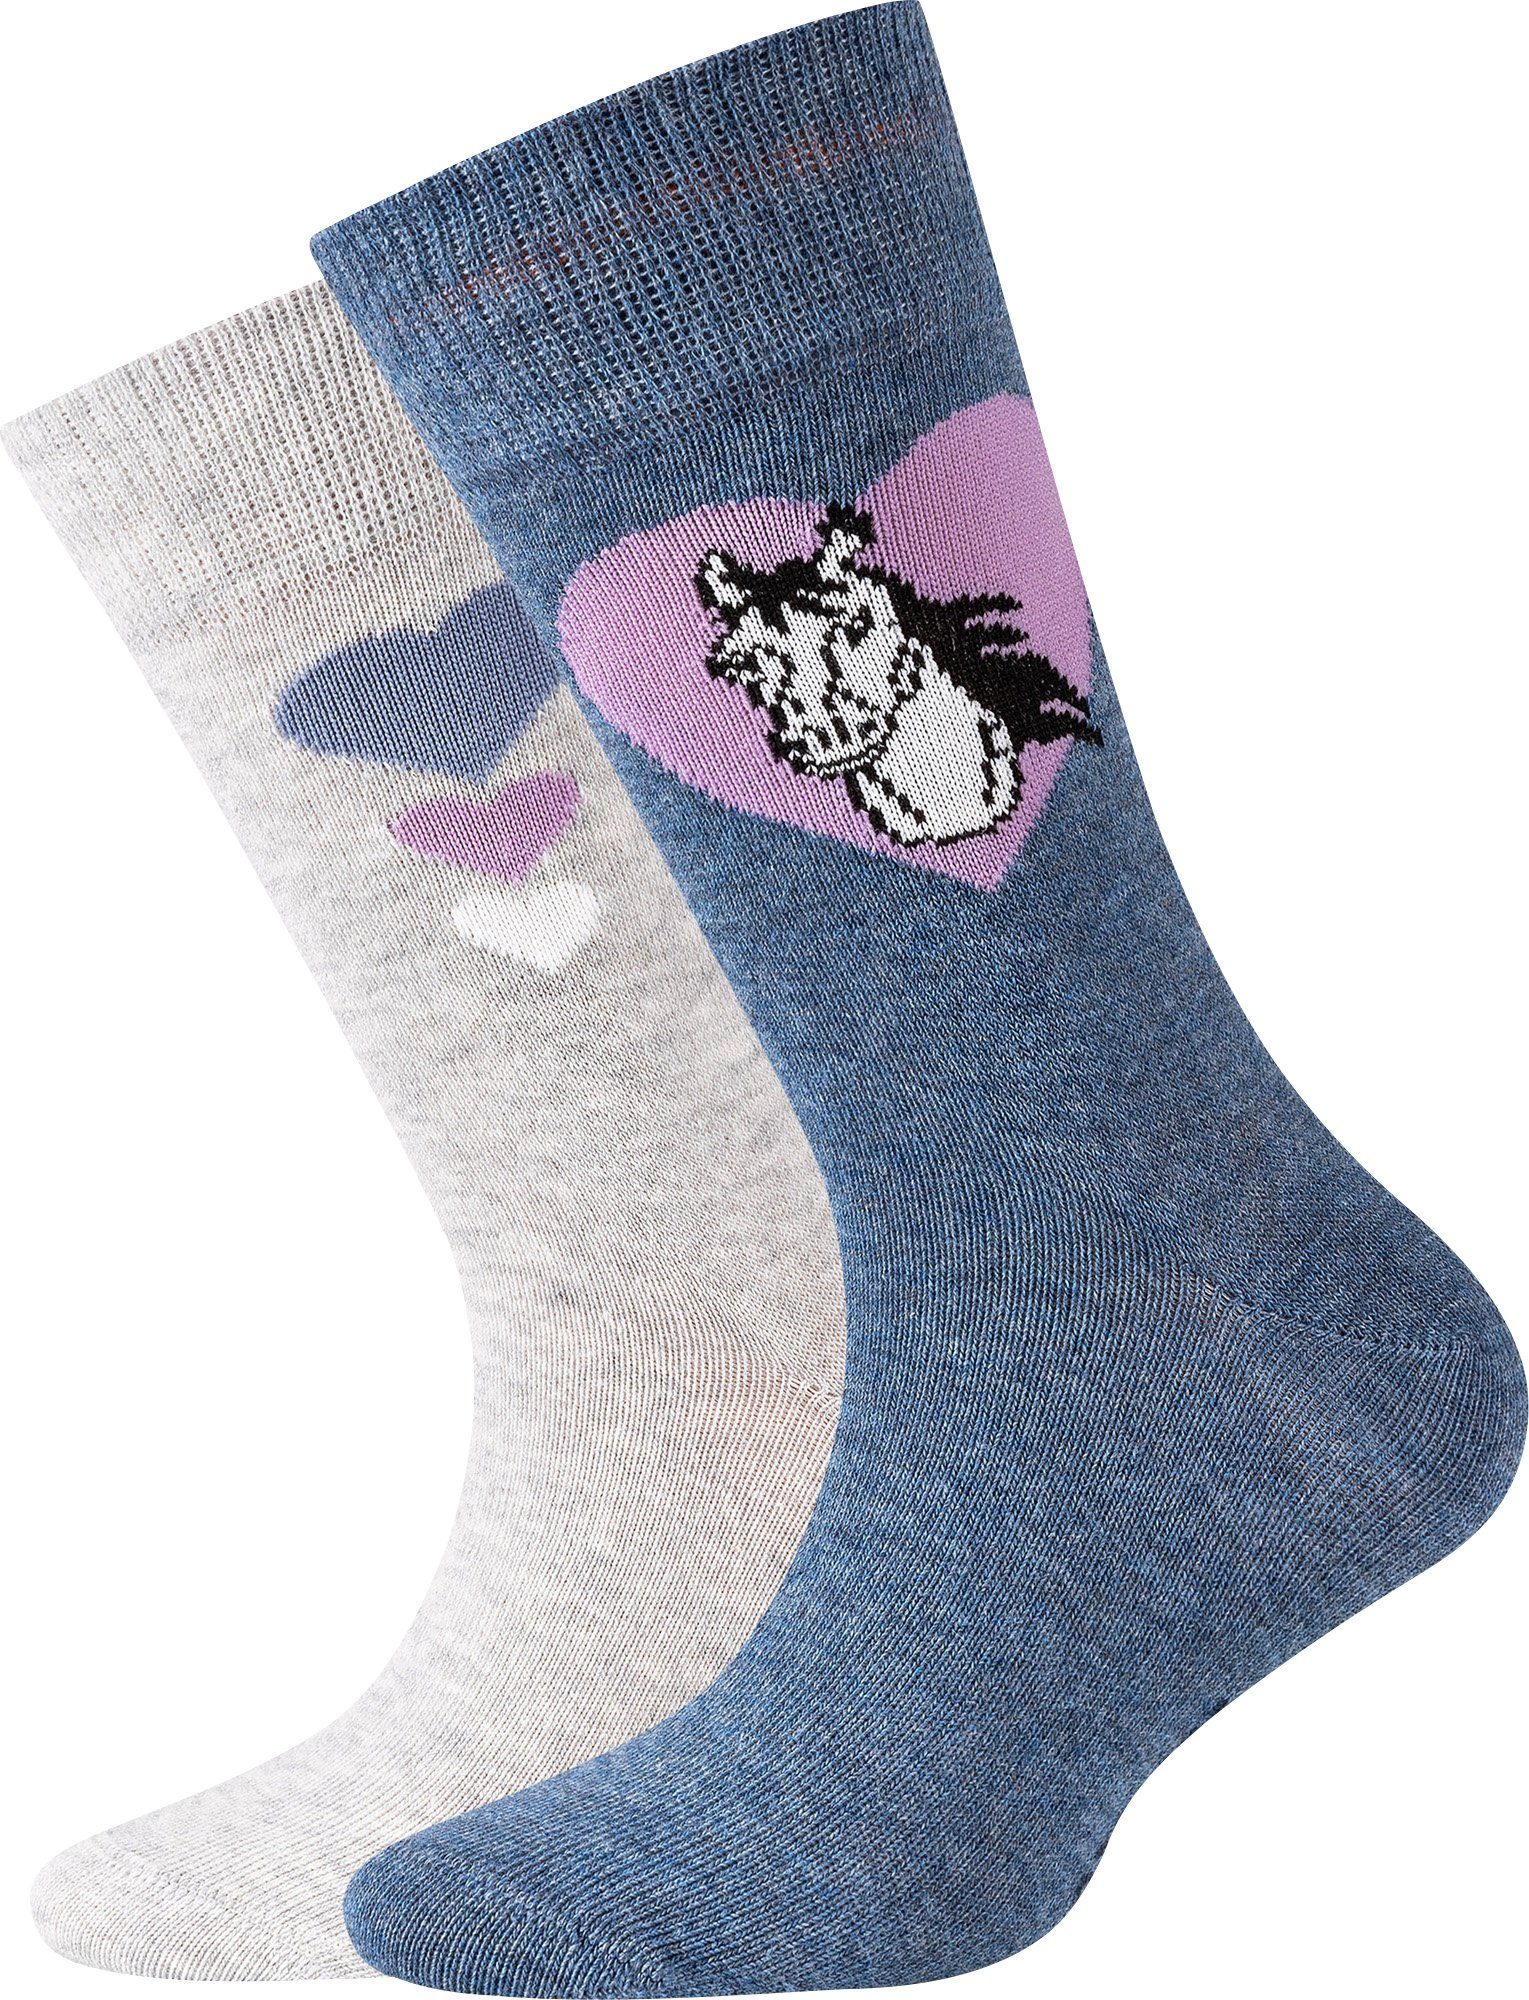 Kinder-Socken Camano jeansblau/hellgrau meliert Herzen 2 Motiv: Socken Pferd, Paar